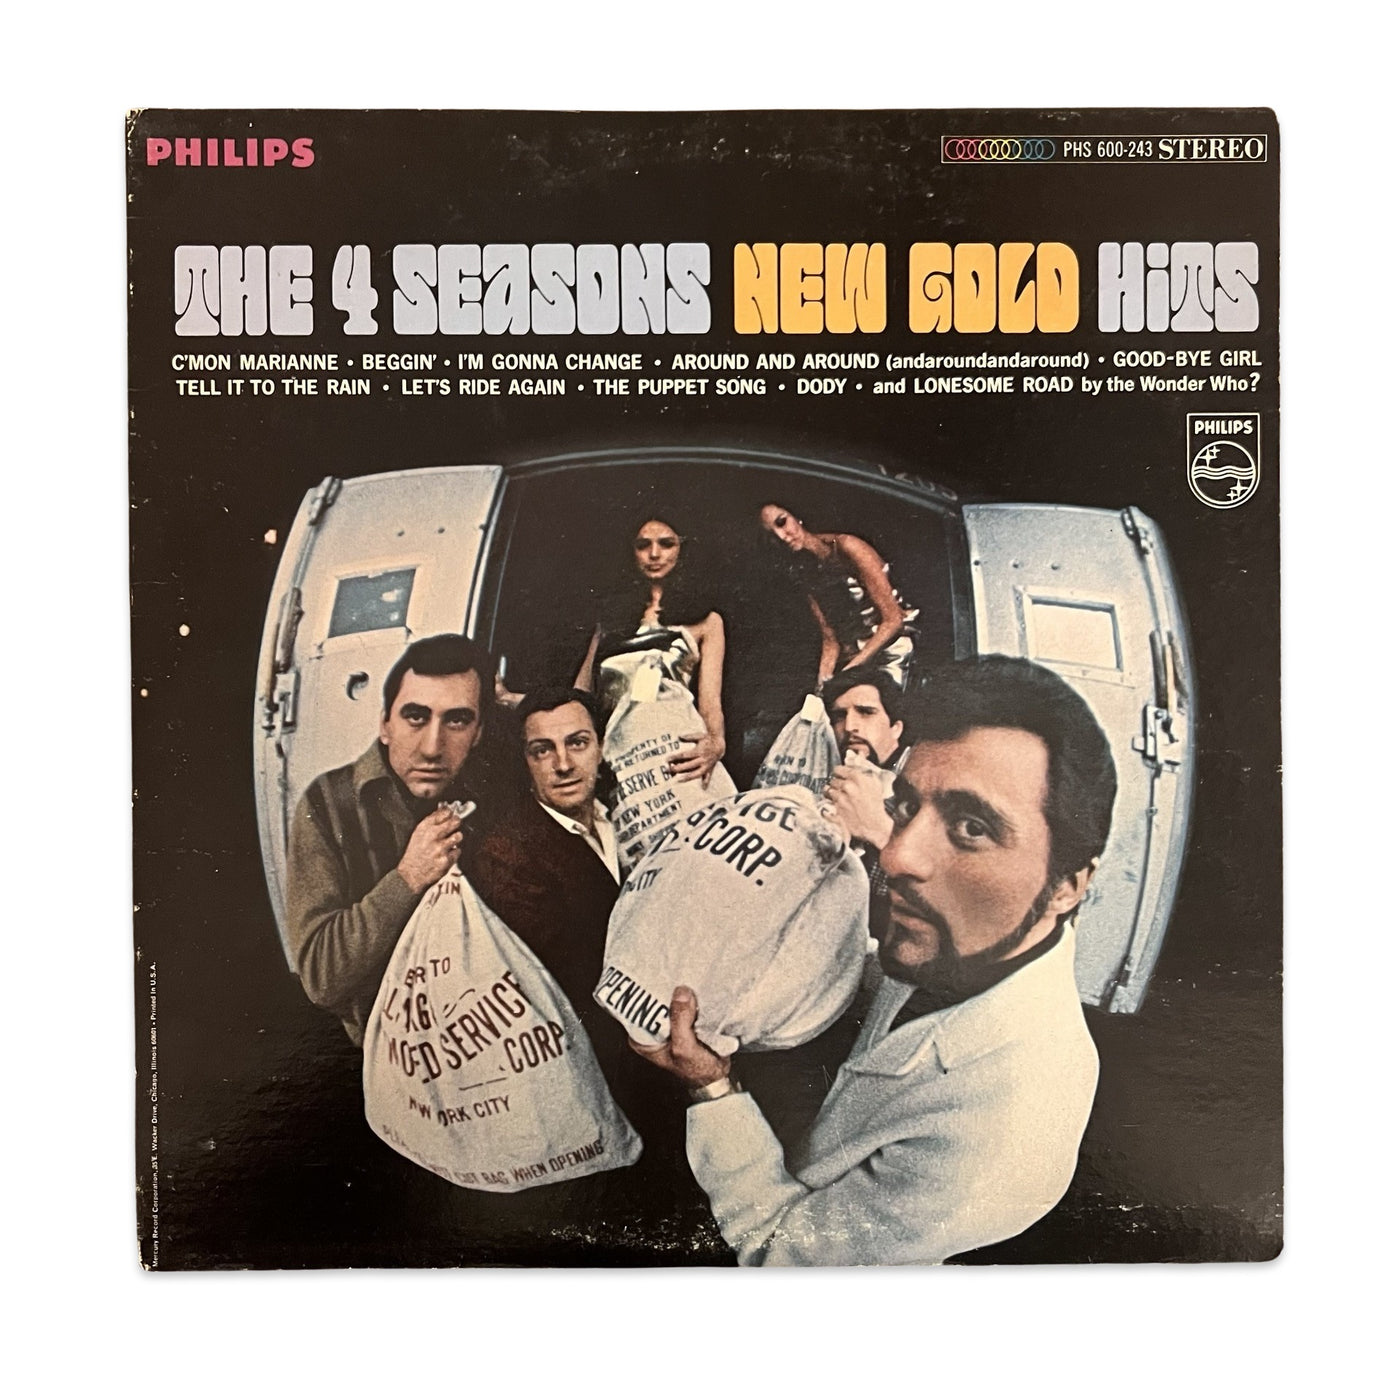 The 4 Seasons – New Gold Hits